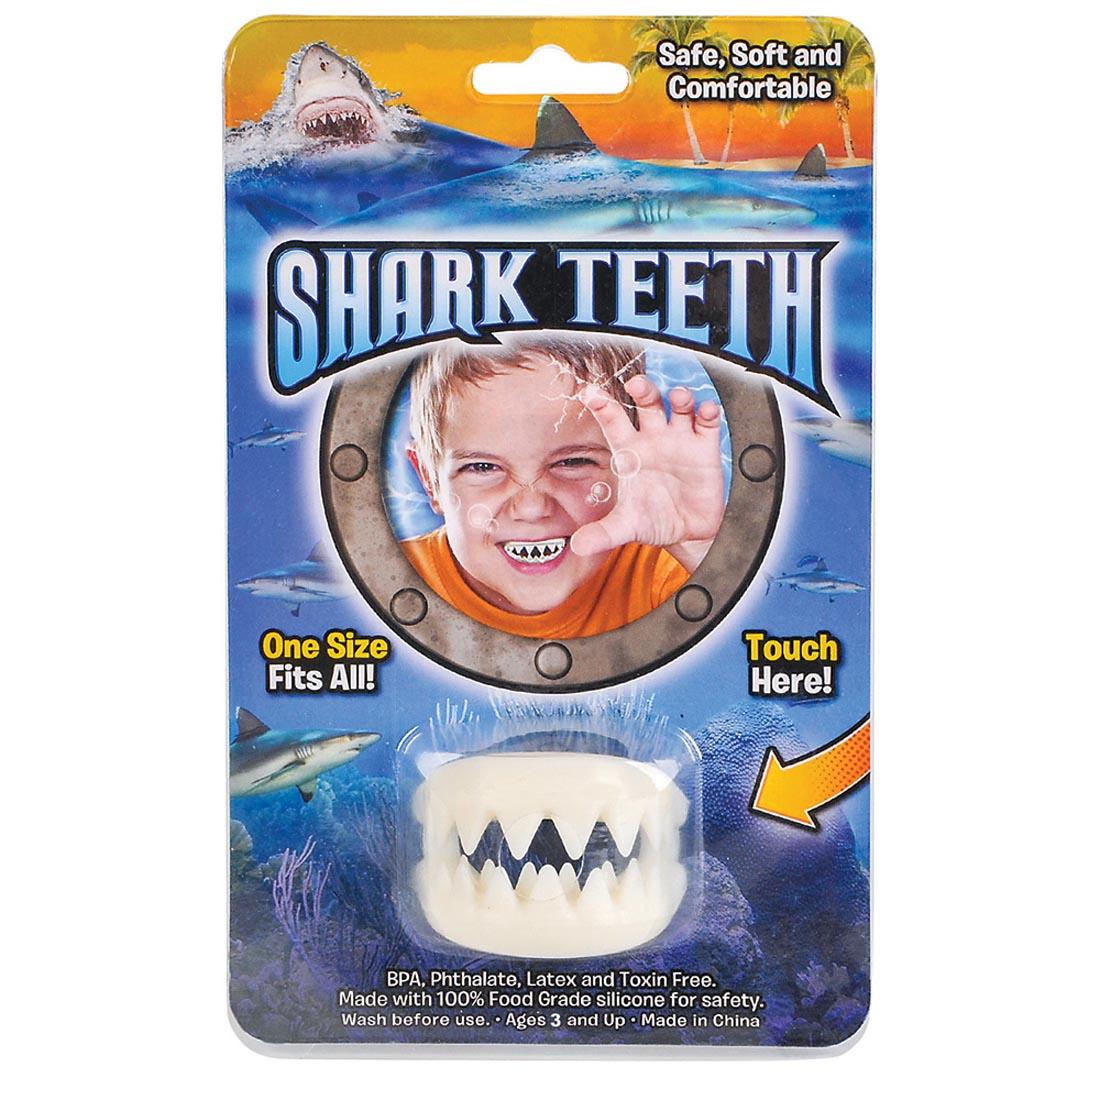 Package of Great White Shark Teeth